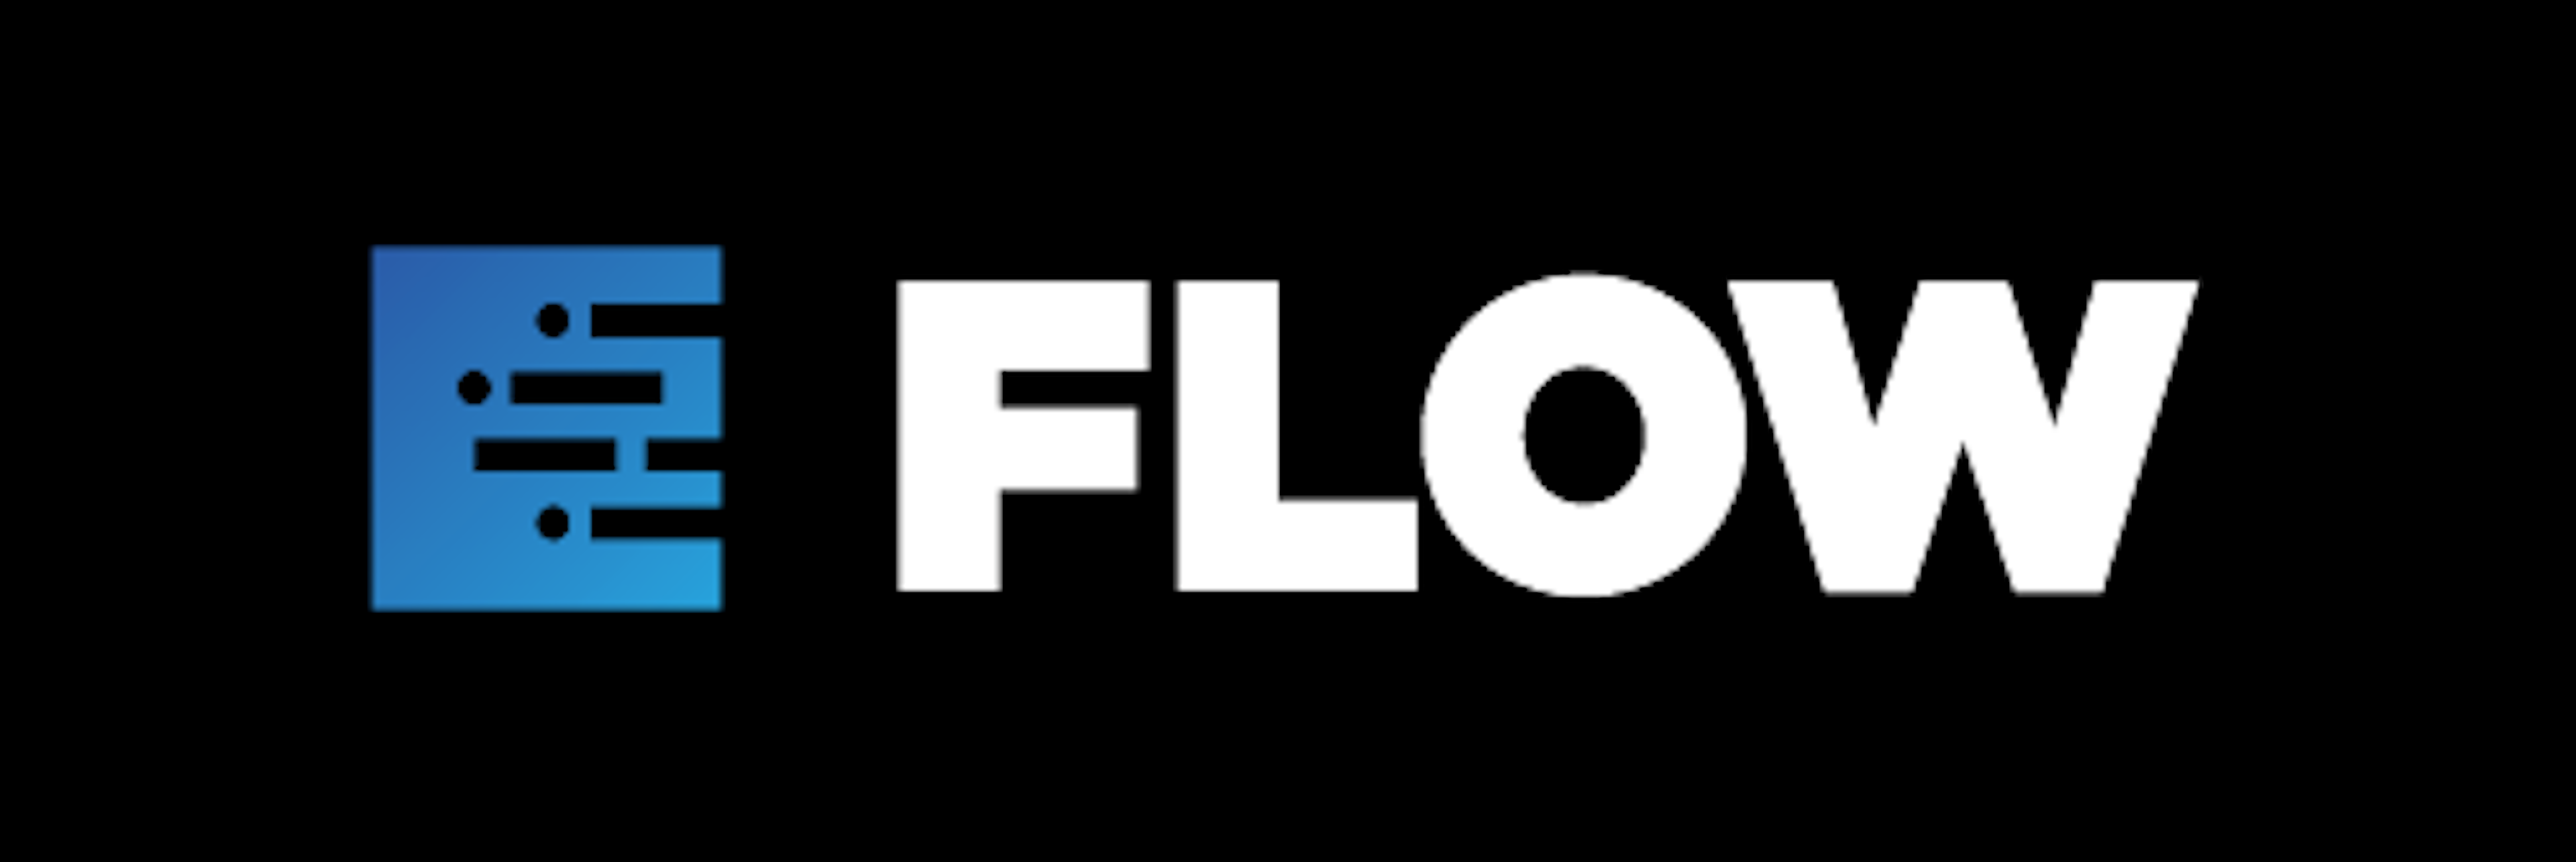 Pluralsight Flow Logo